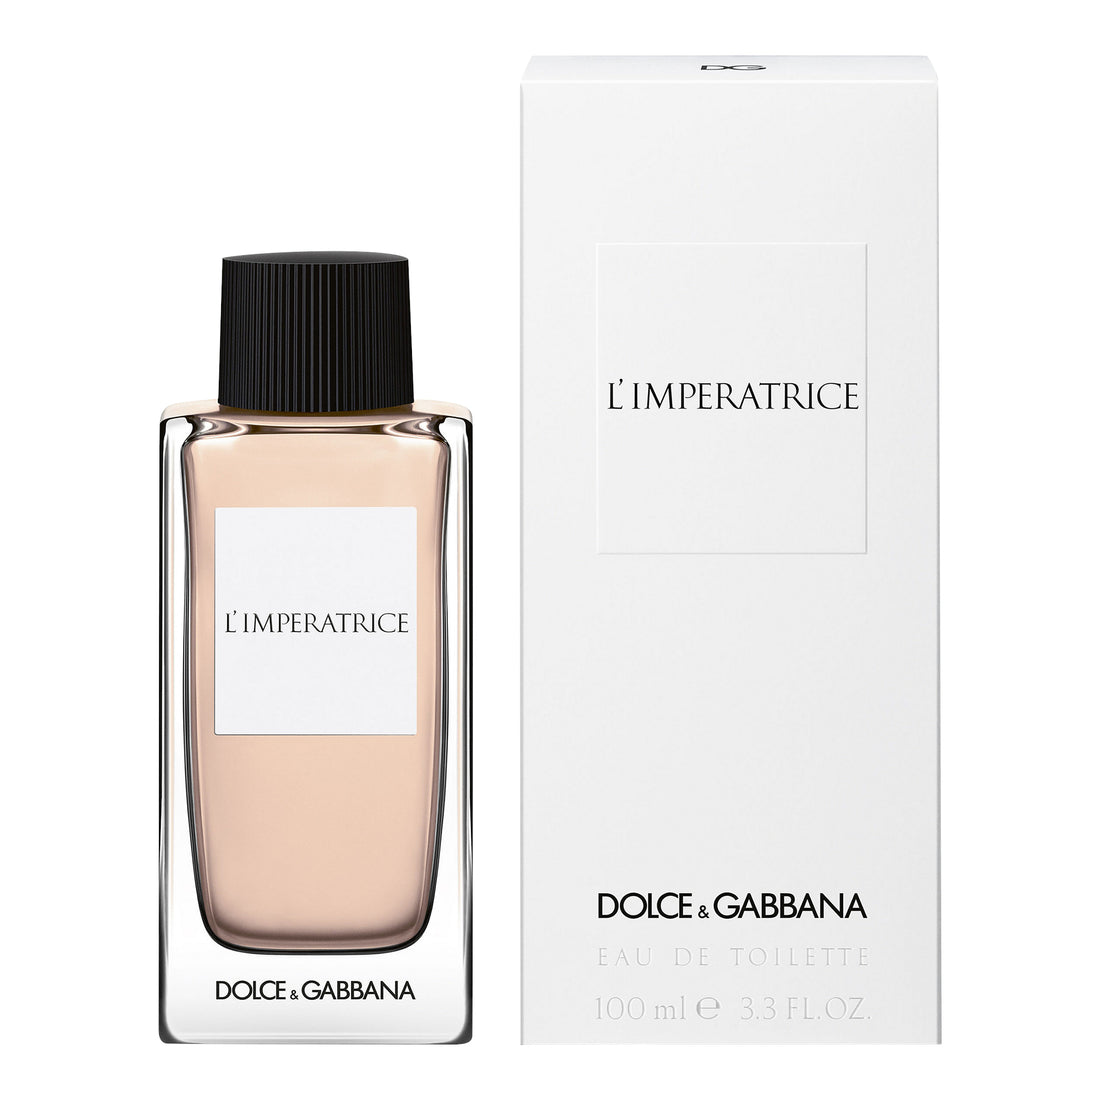 Dolce &amp; Gabbana Limperatrice For Her Eau de Toilette